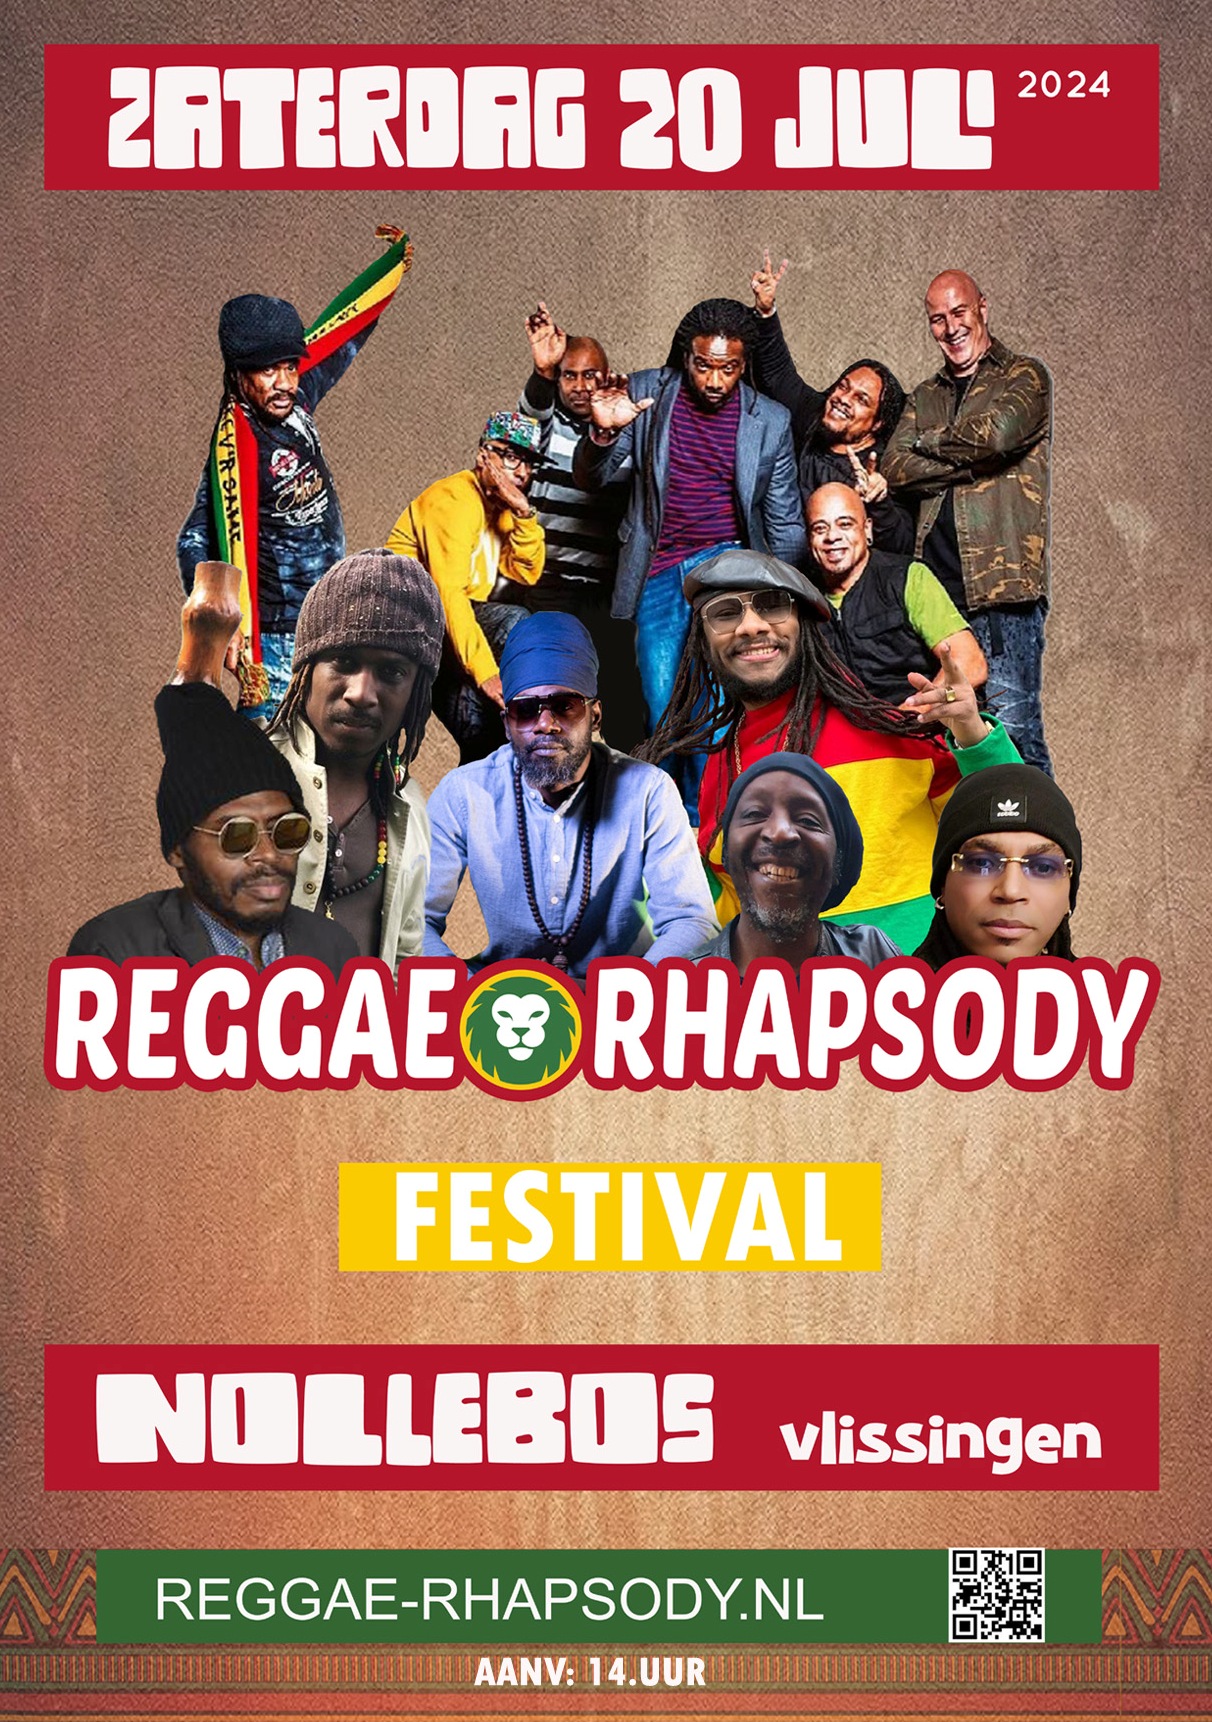 Zaterdag Reggae Rhapsody Festival in het Nollebos in Vlissingen